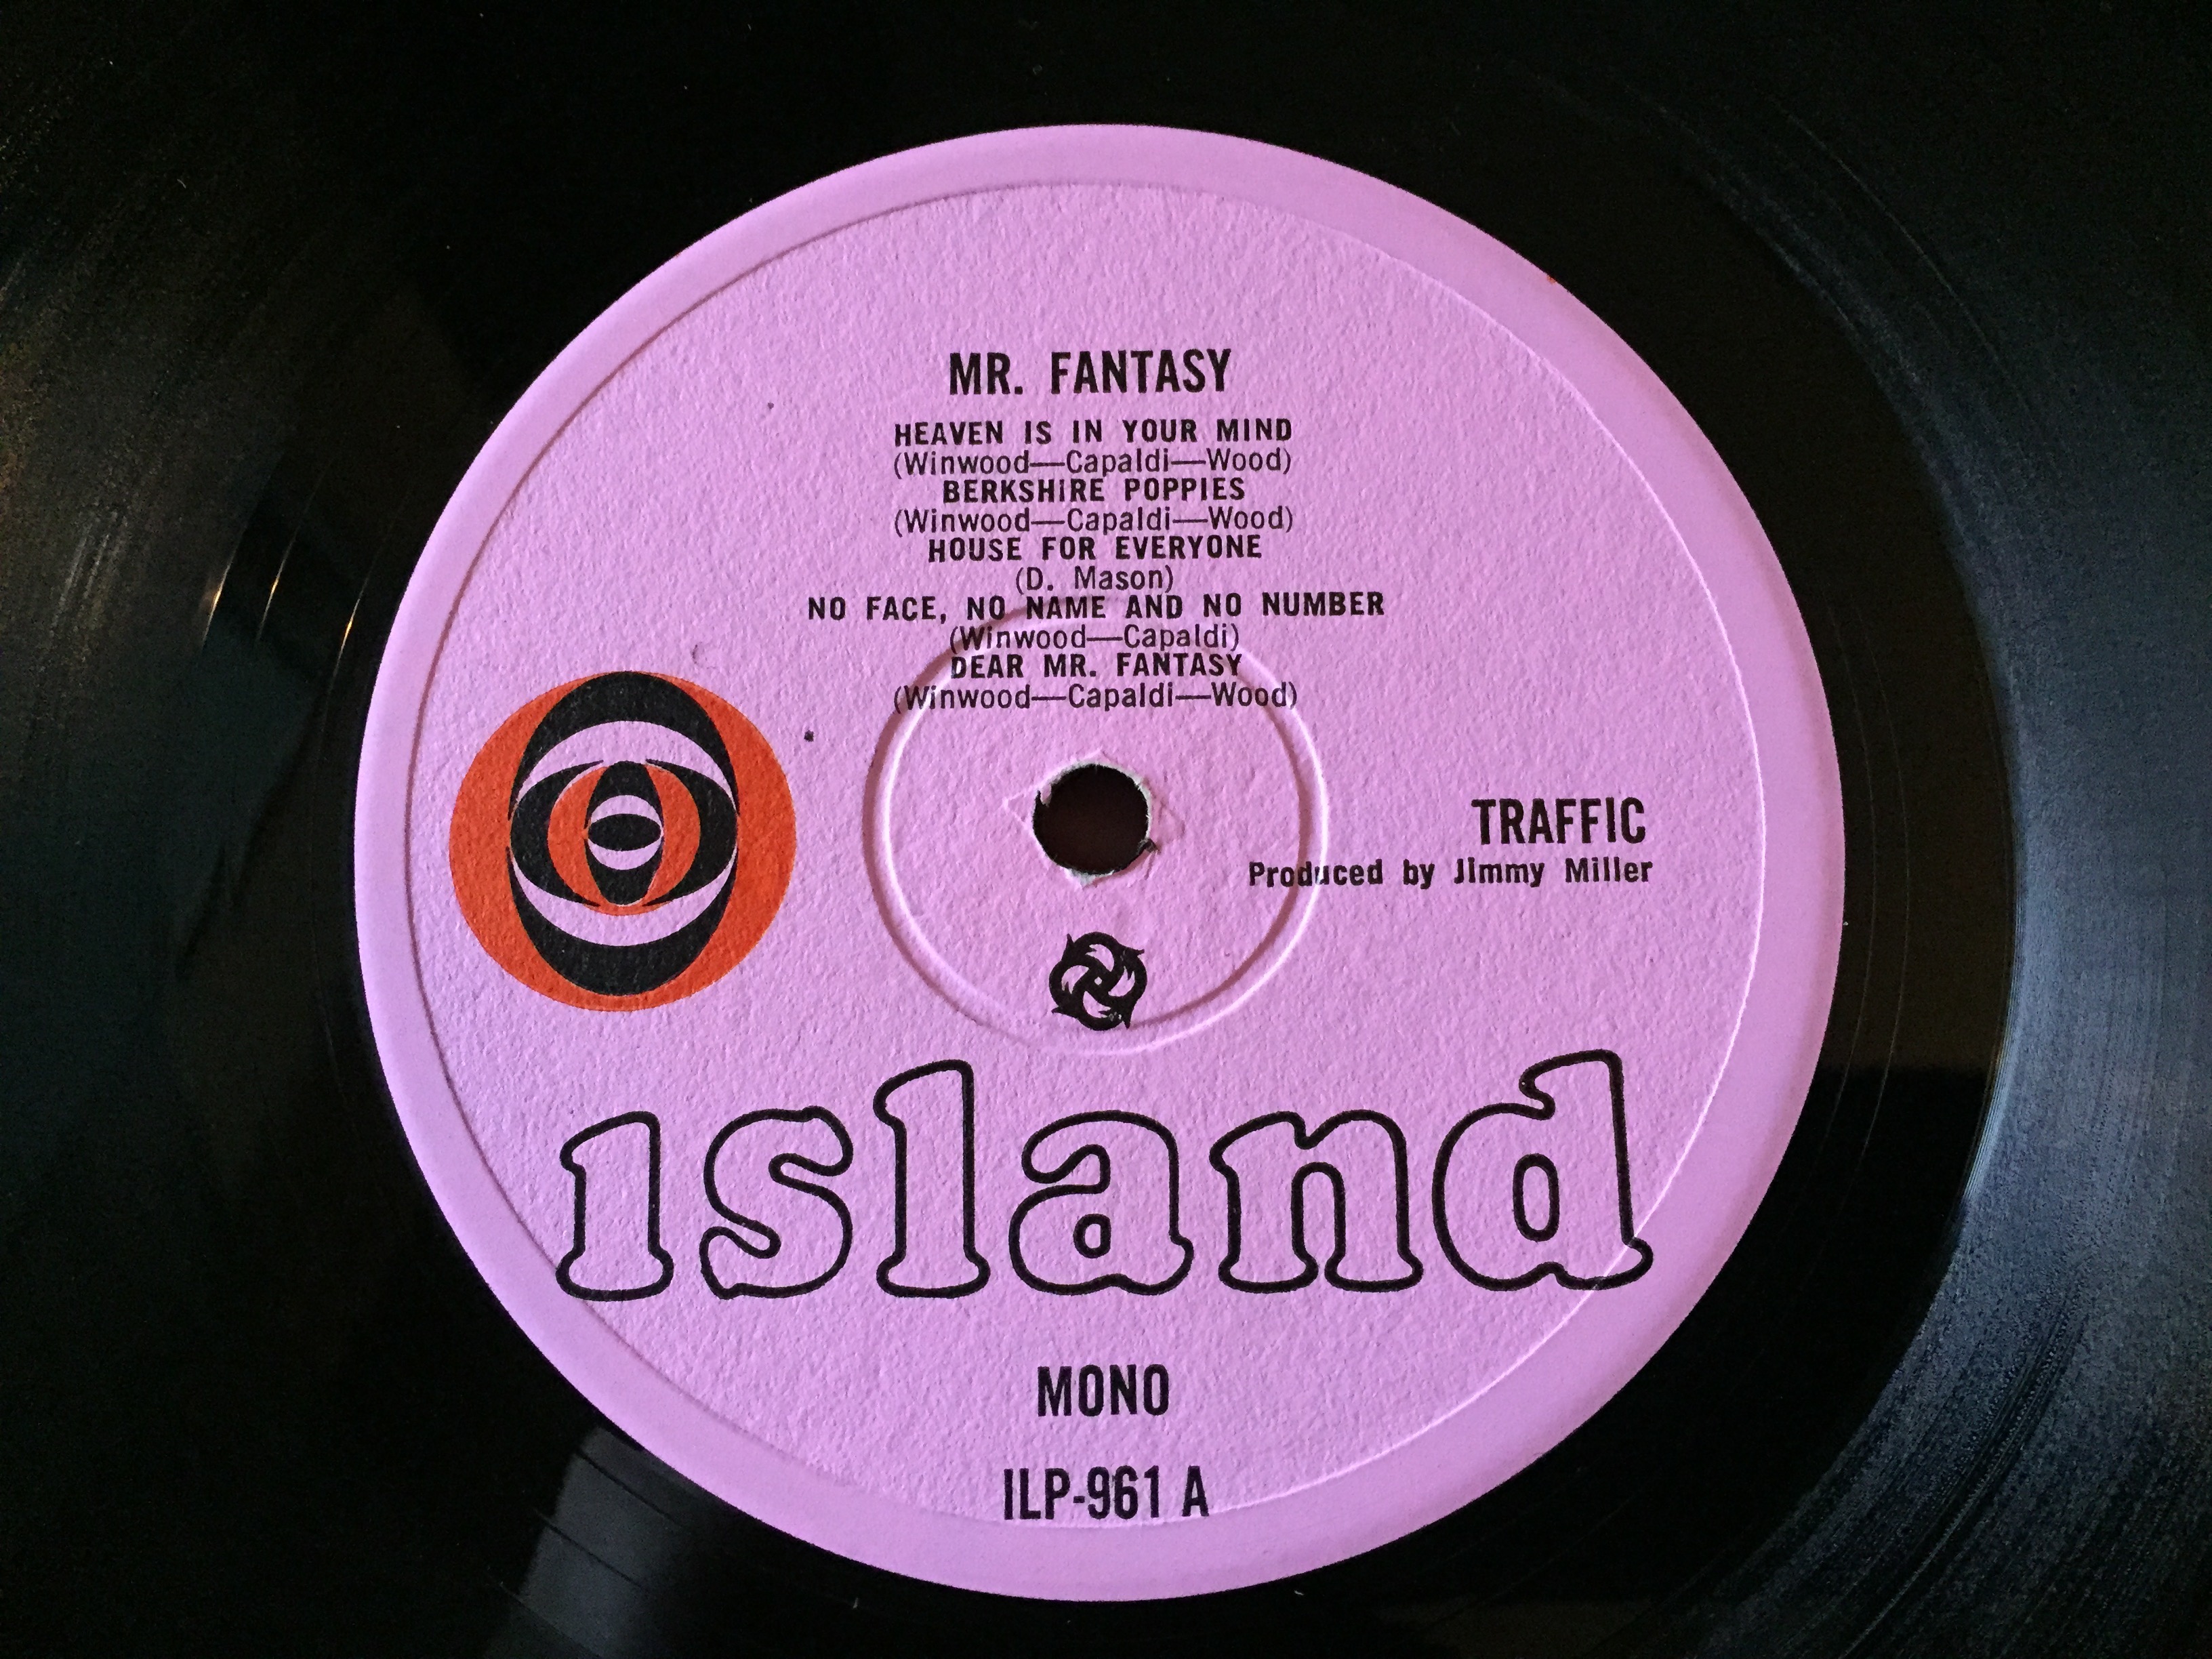 Island Records- The Pink Label Era - The Vinyl Press